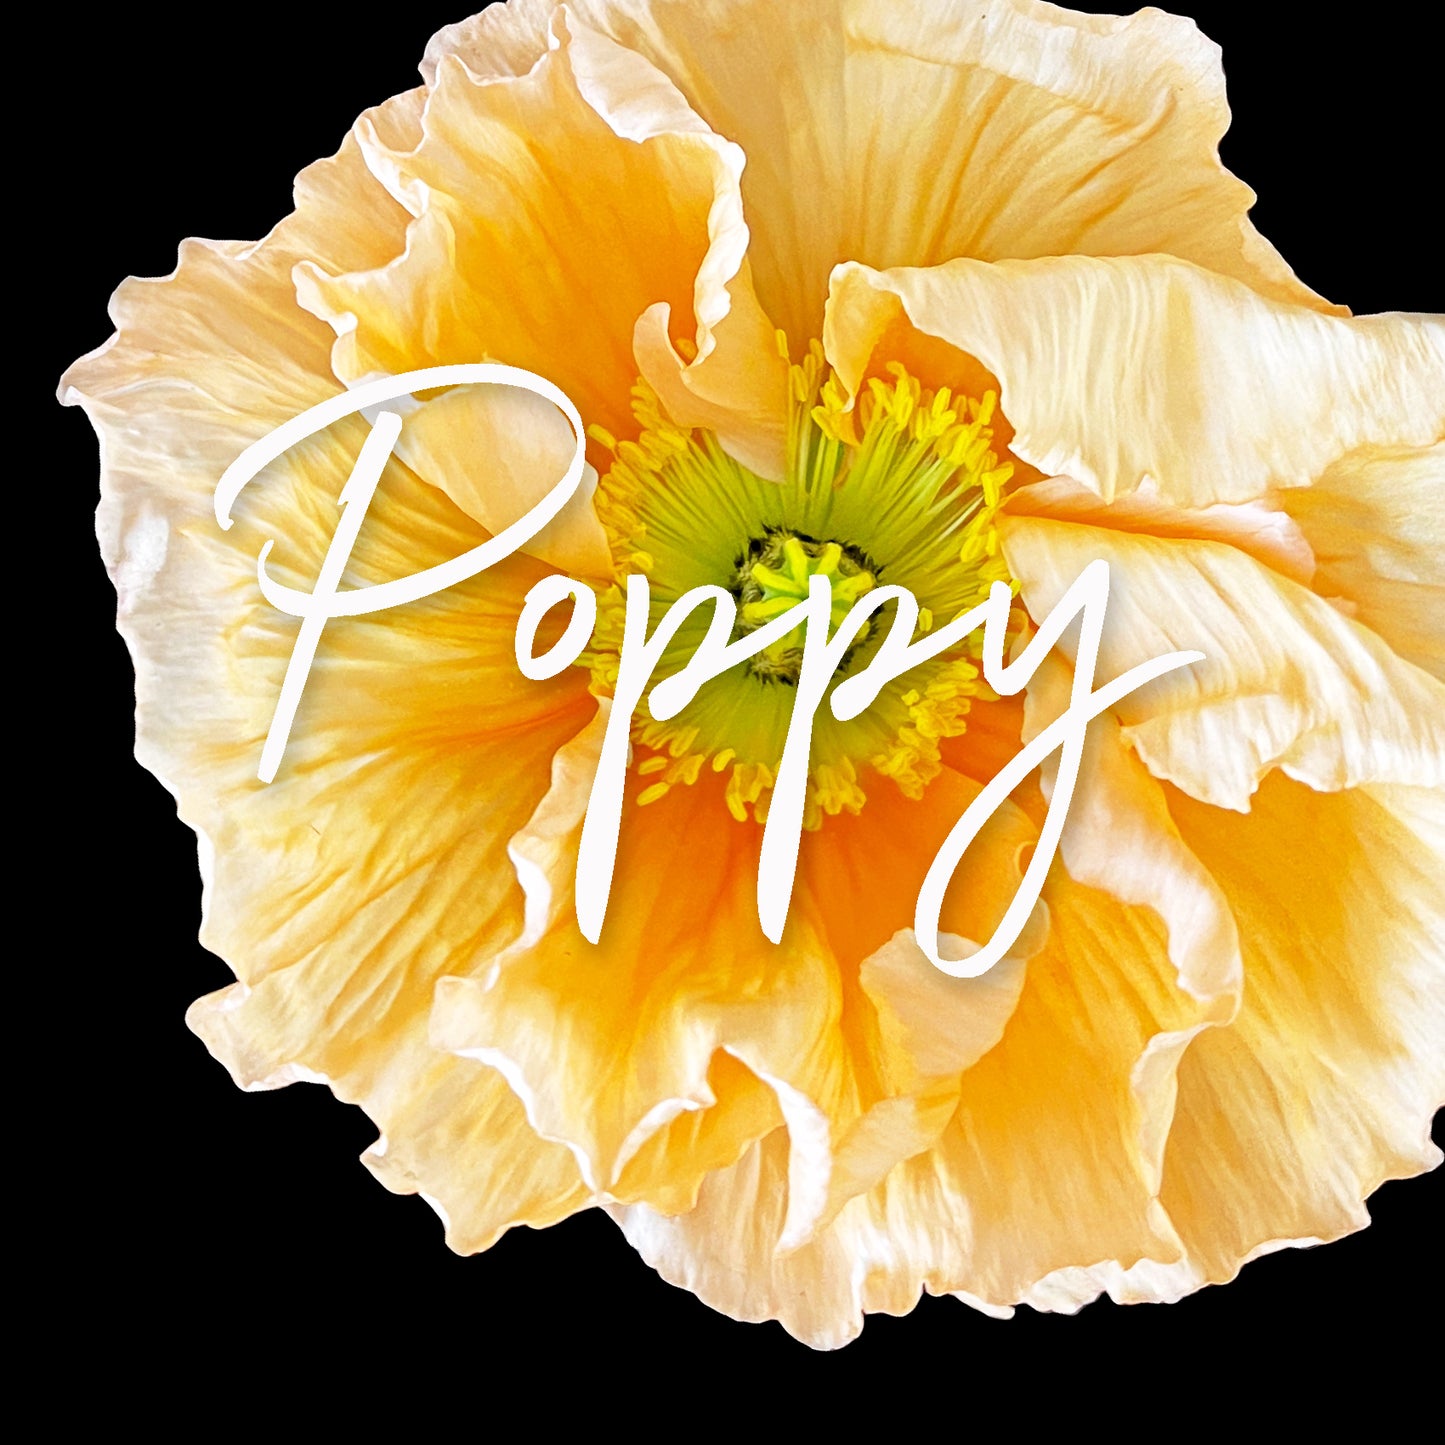 Behind the Bloom: Poppy